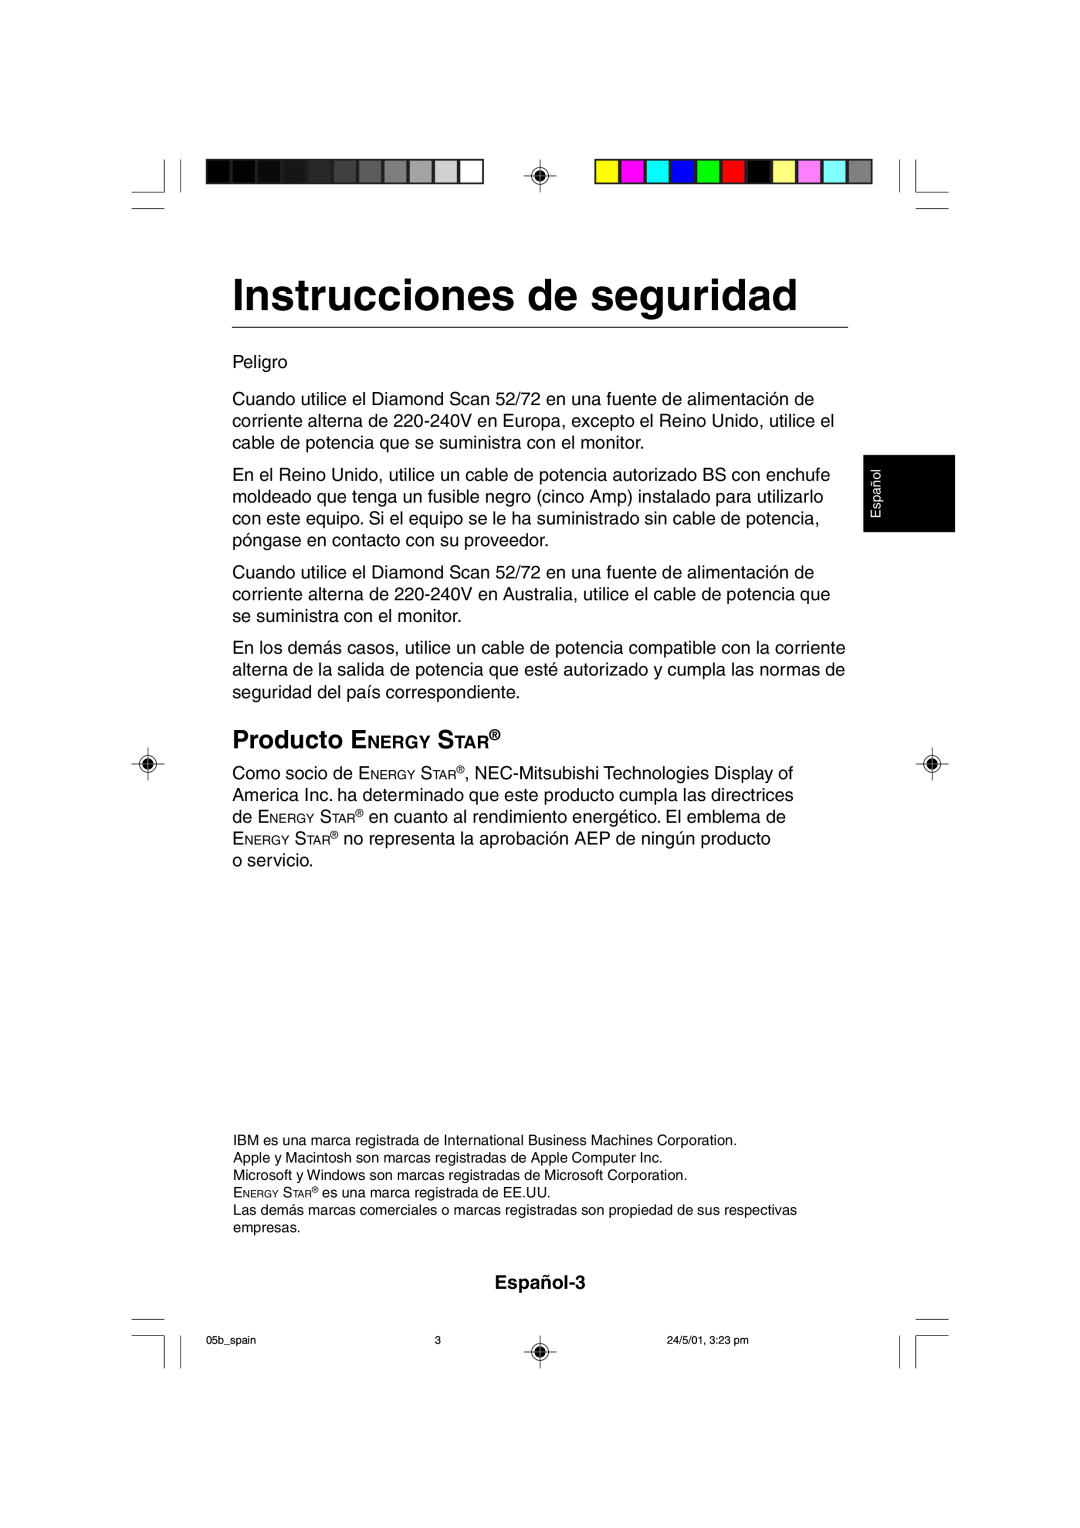 Mitsubishi Electronics M557 user manual Instrucciones de seguridad, Producto ENERGY STAR 